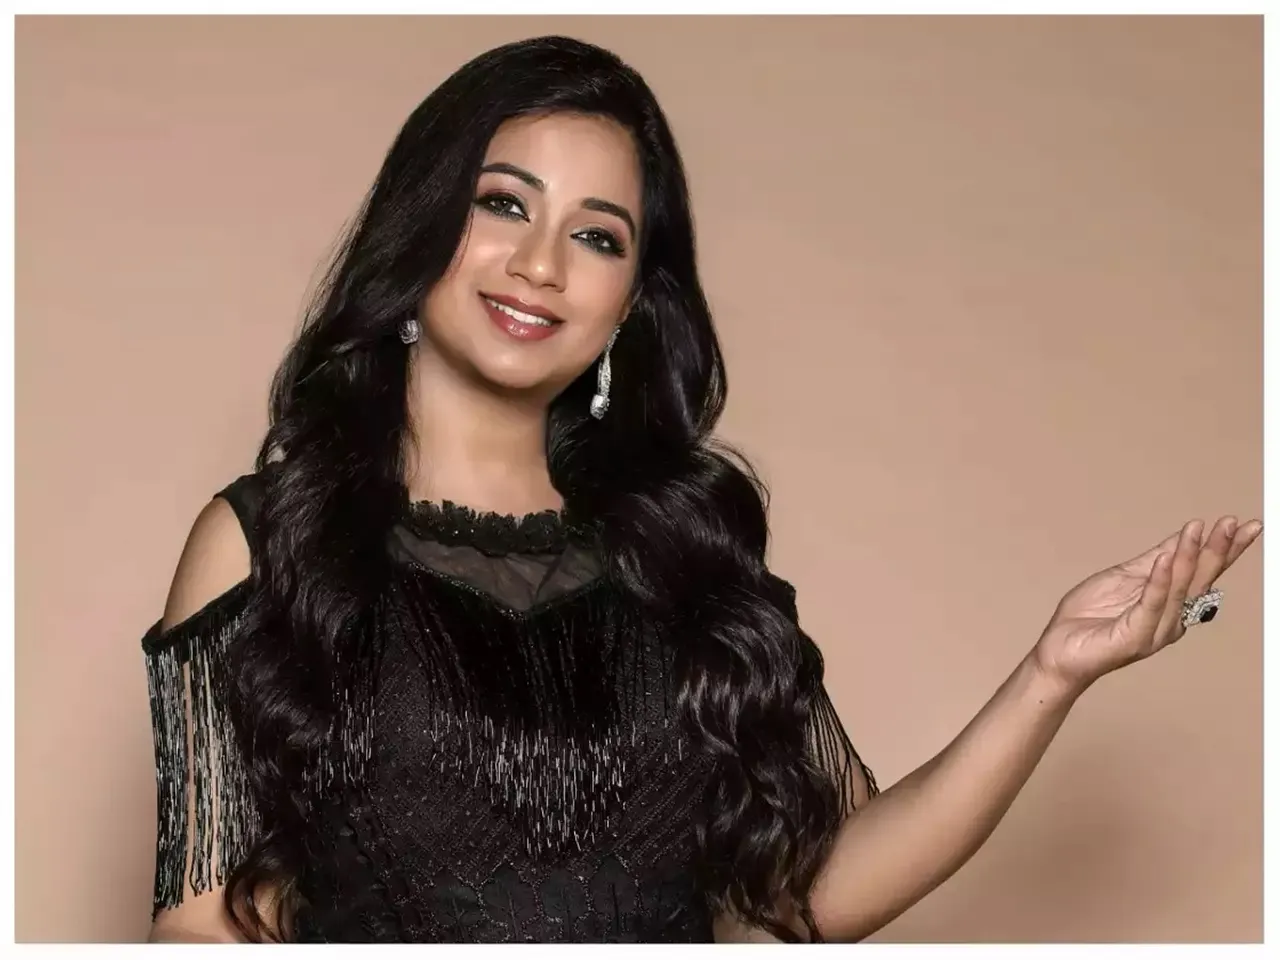 India's music scene has changed drastically, artists are empowered: Shreya Ghoshal